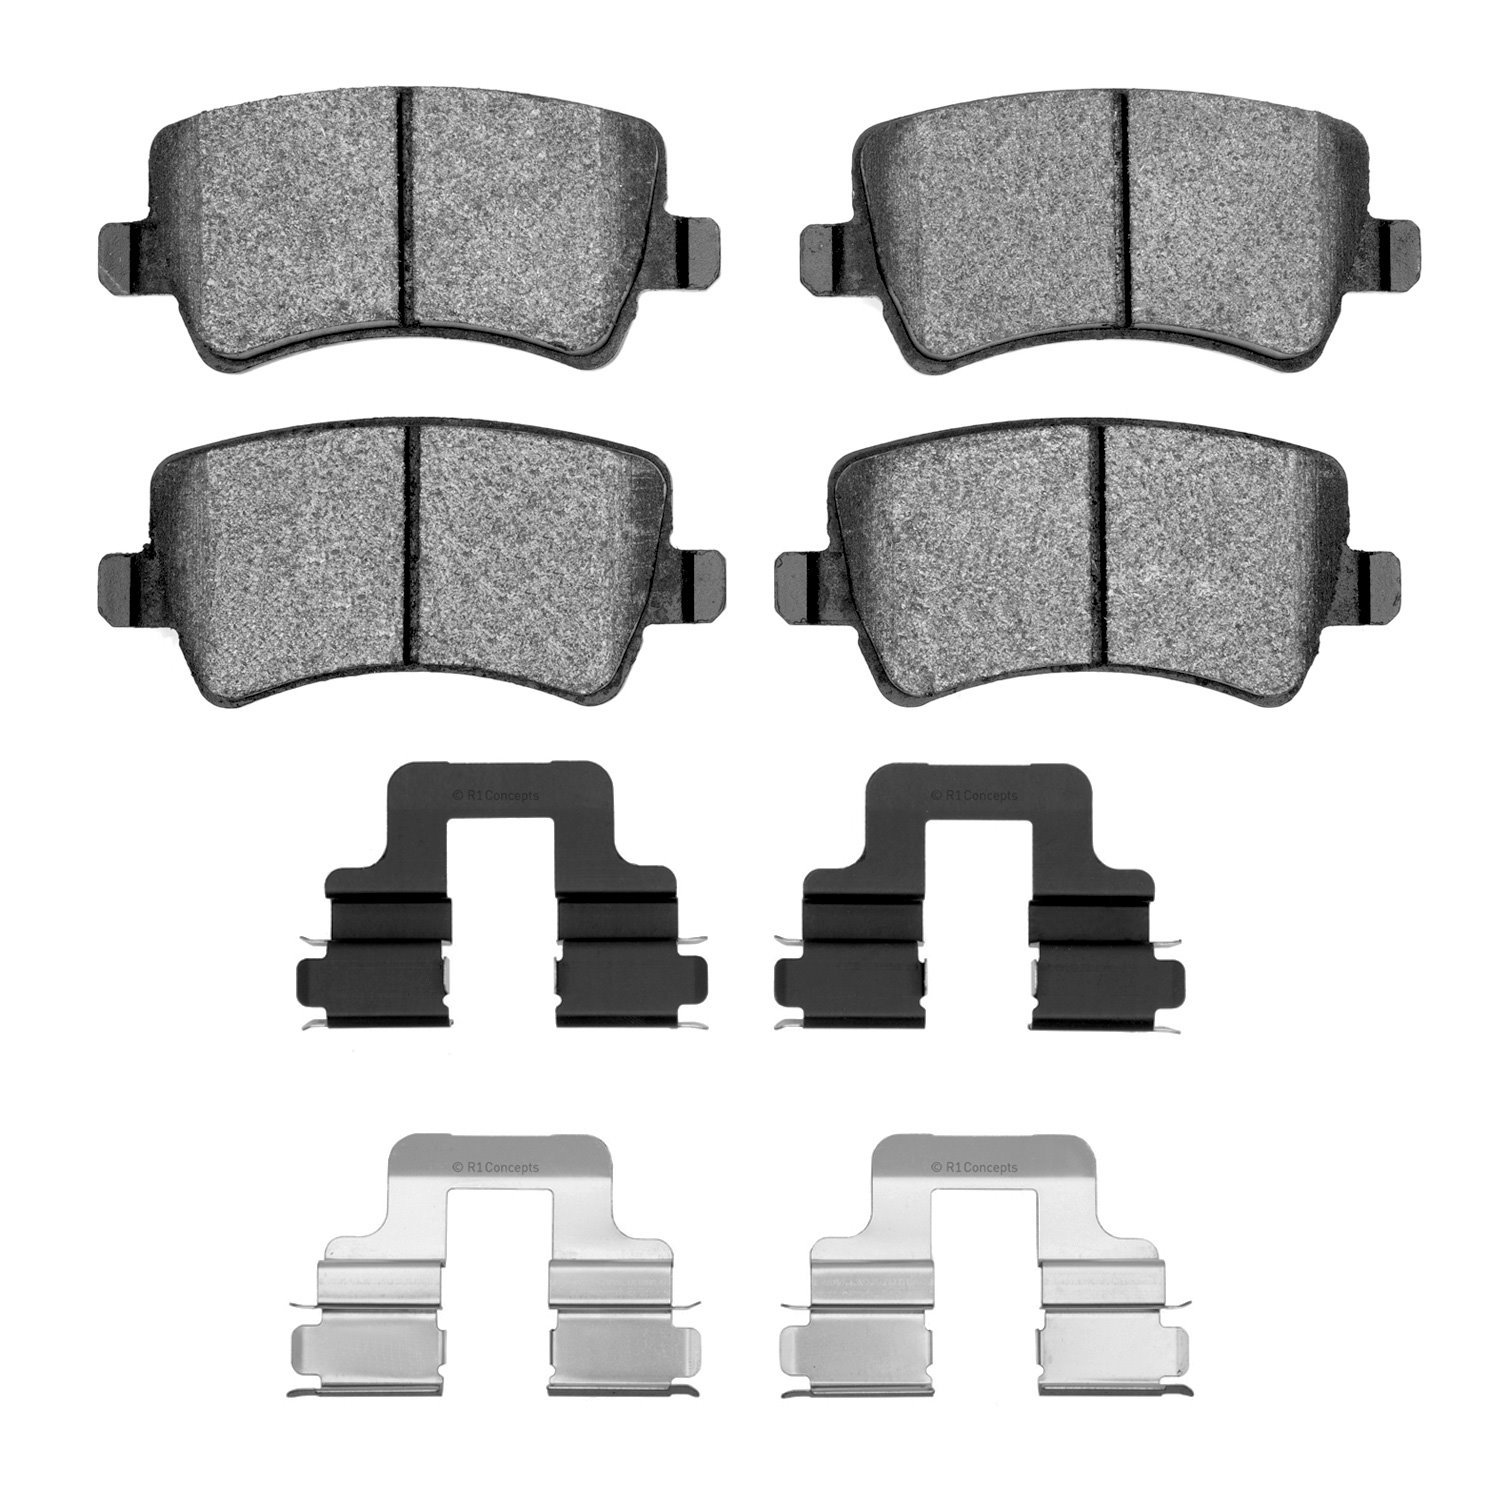 Euro Ceramic Brake Pads & Hardware Kit, 2007-2018 Fits Multiple Makes/Models, Position: Rear